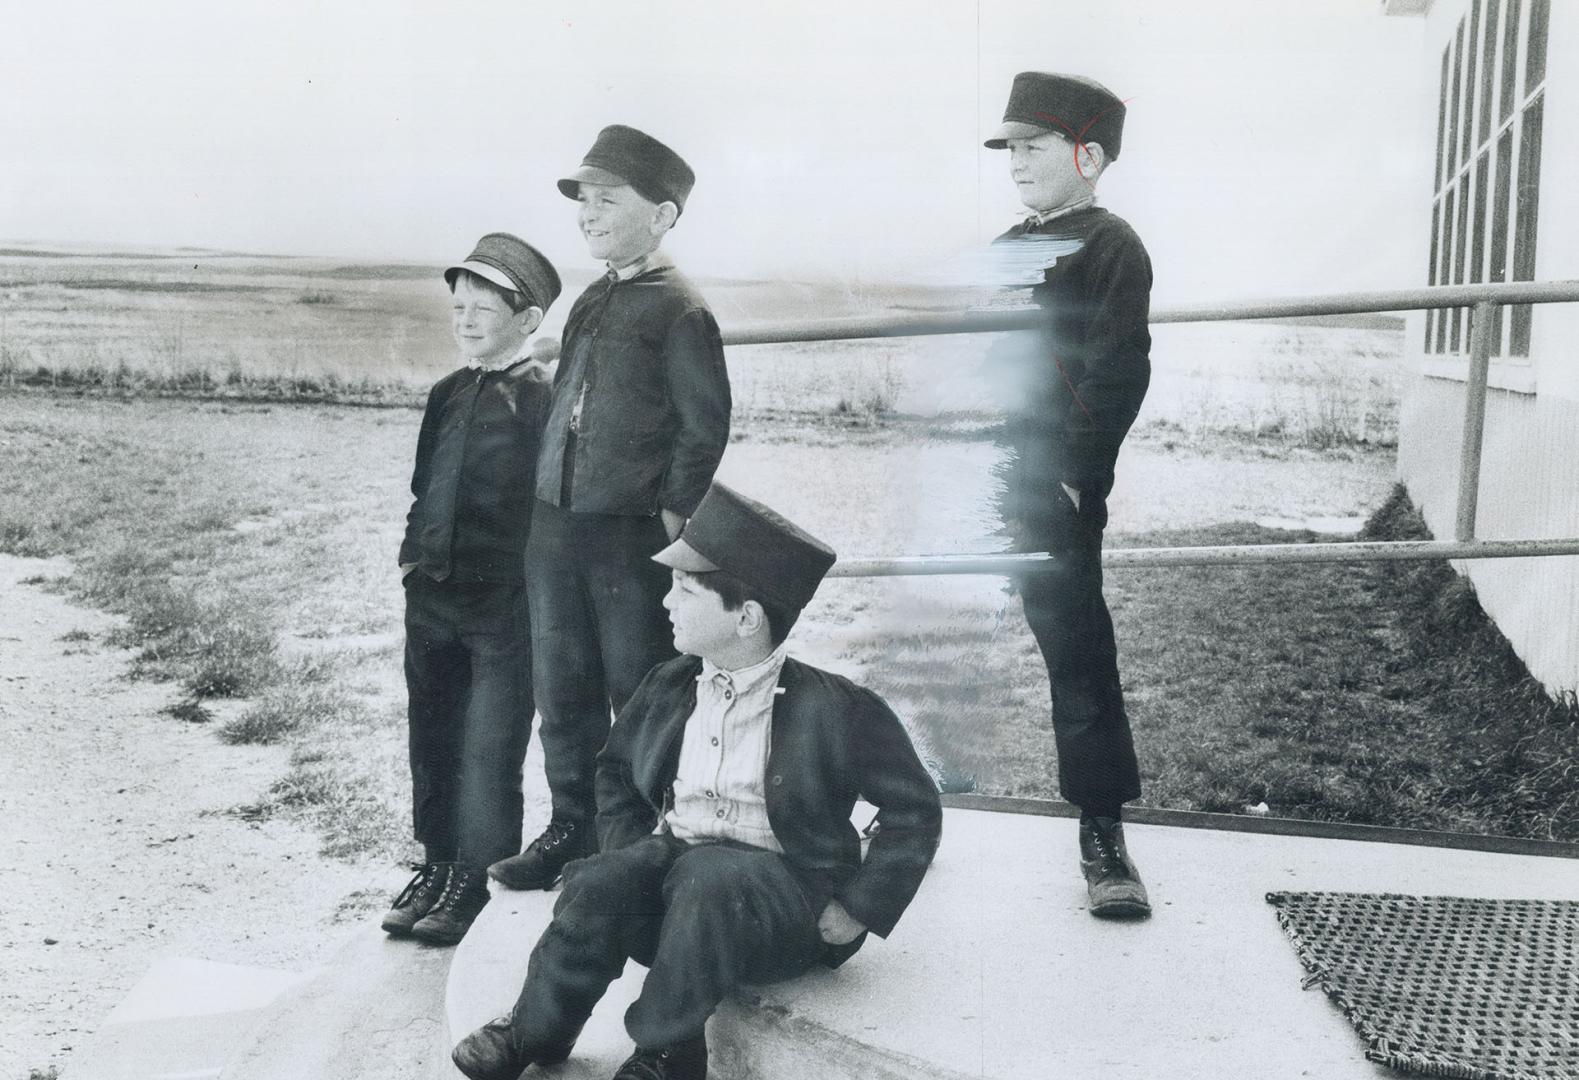 Hutterite Boys wear peaked caps until leaving school at age 14 or 15